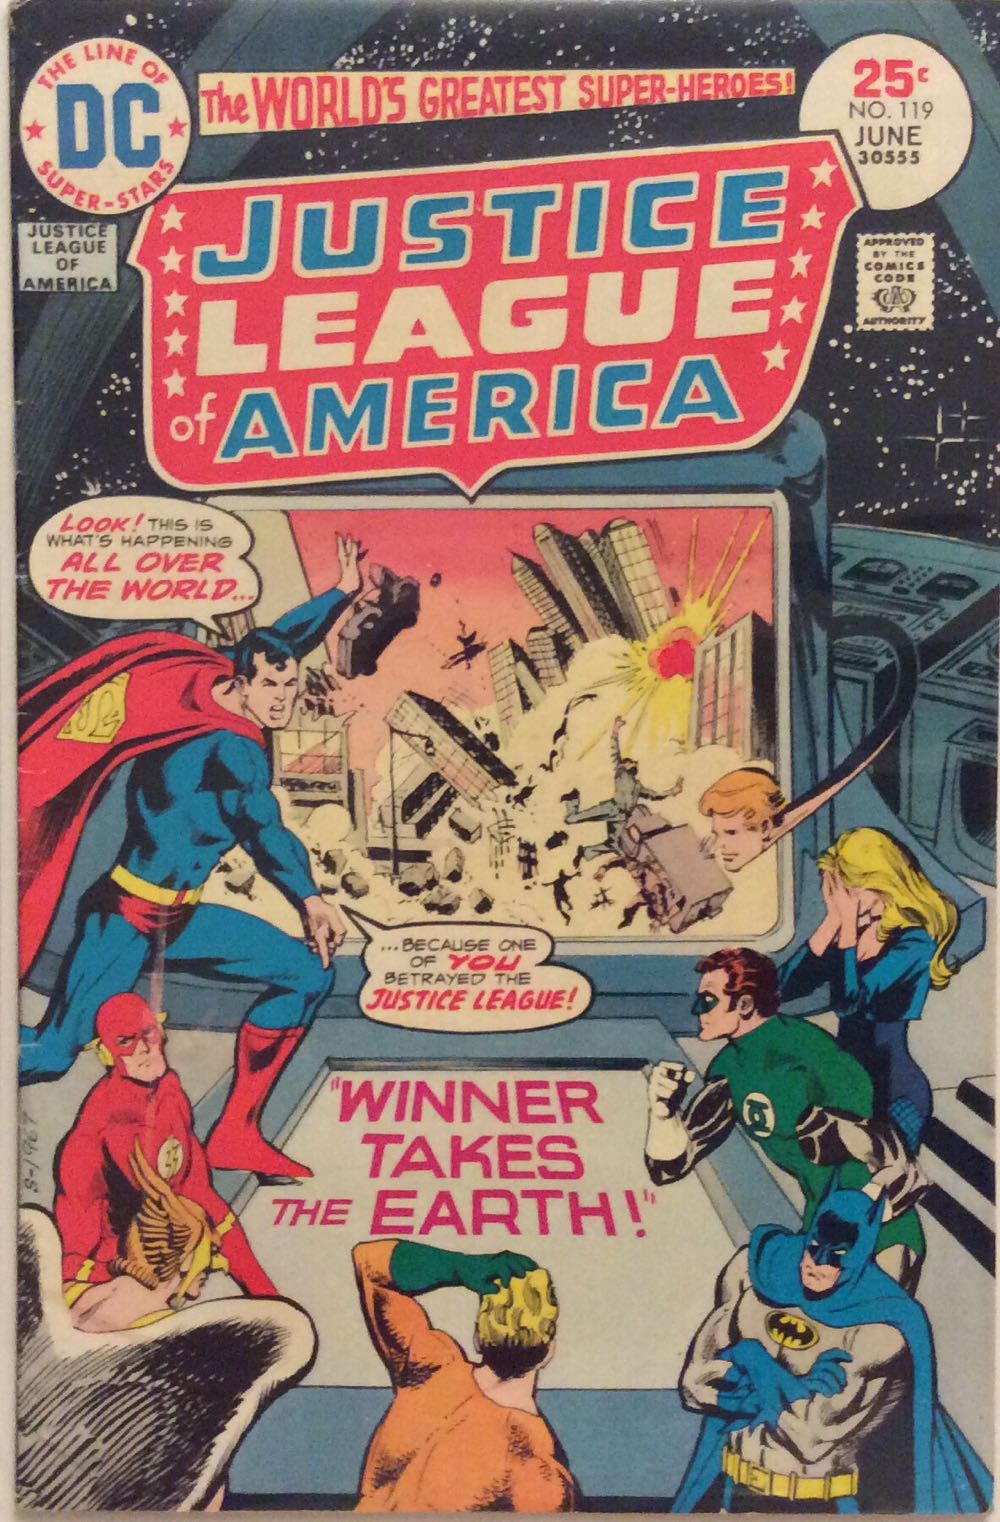 Justice League of America (1960) - DC Comics (119 - Jun 1975) comic book collectible - Main Image 3